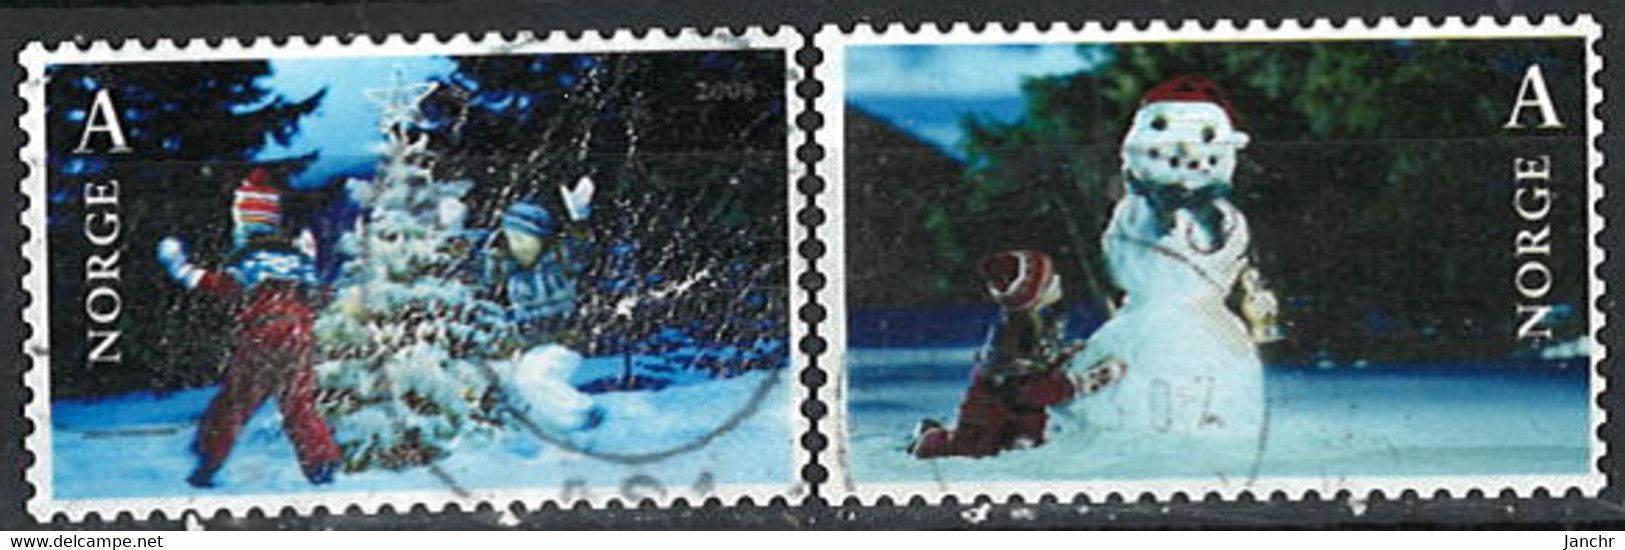 Norwegen Norway 2006. Mi.Nr. 1596-1597, Used O - Used Stamps